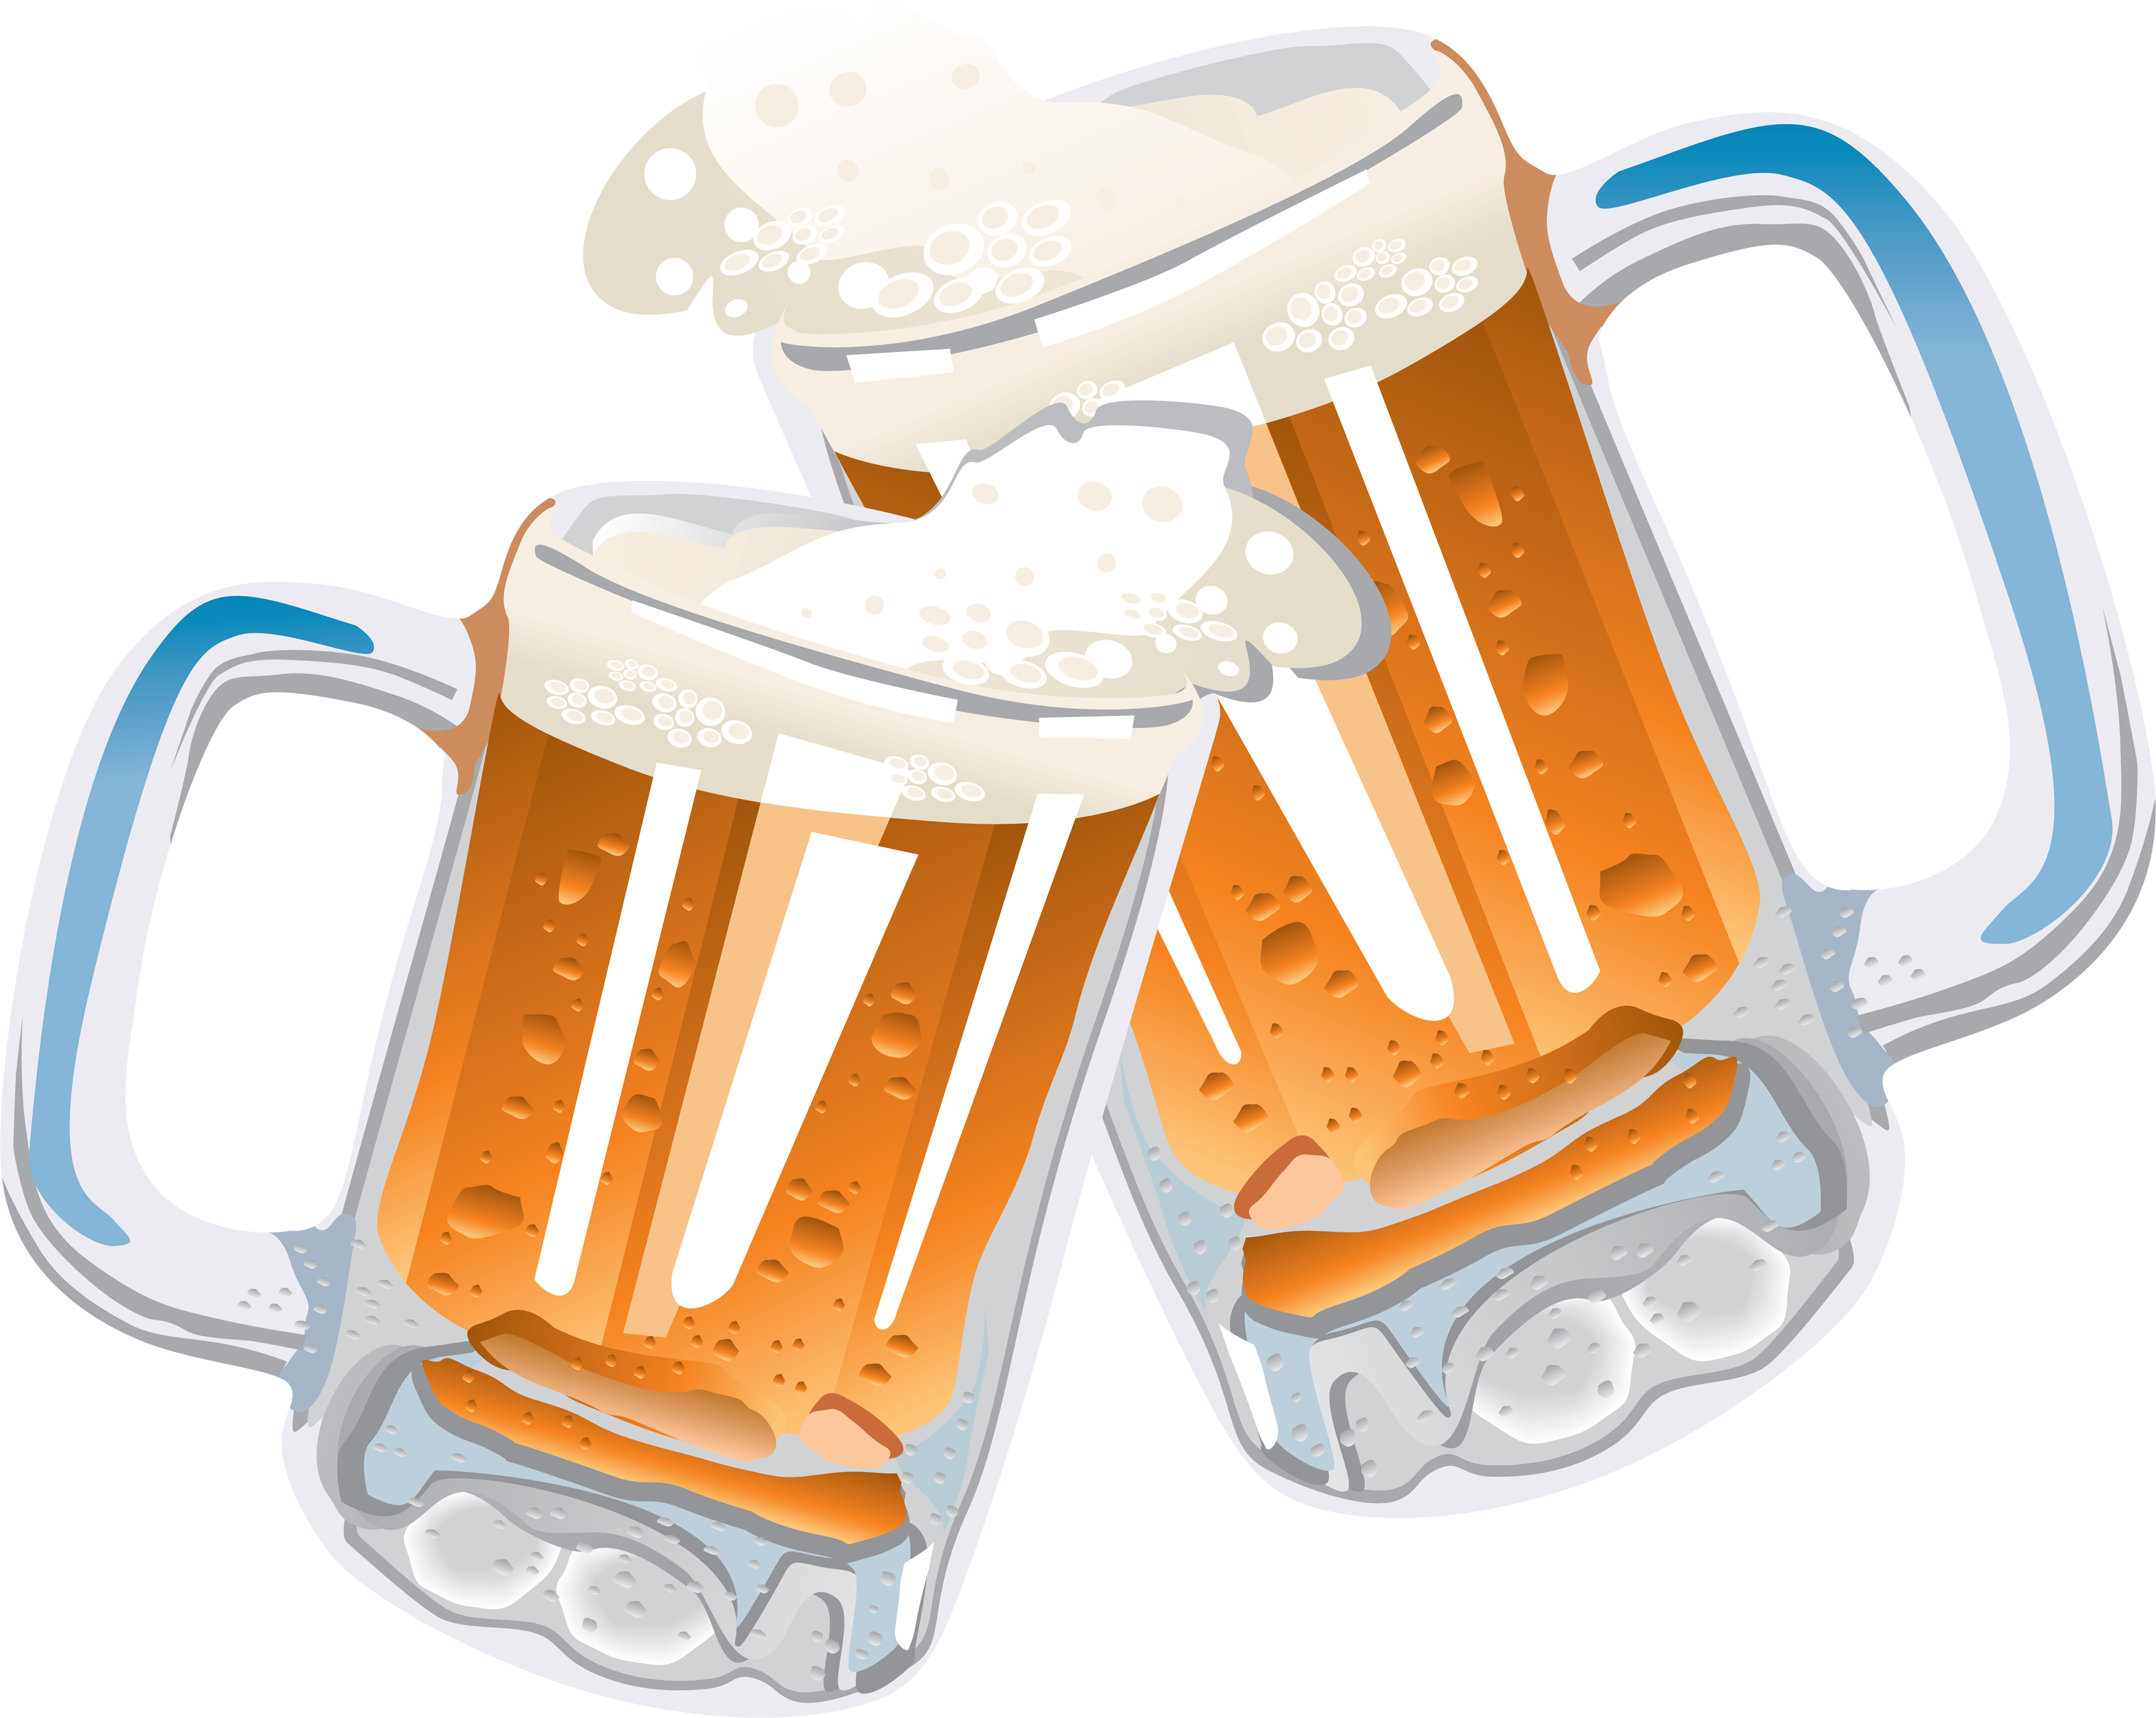 free-beer-mug-clip-art-png-download-free-beer-mug-clip-art-png-png